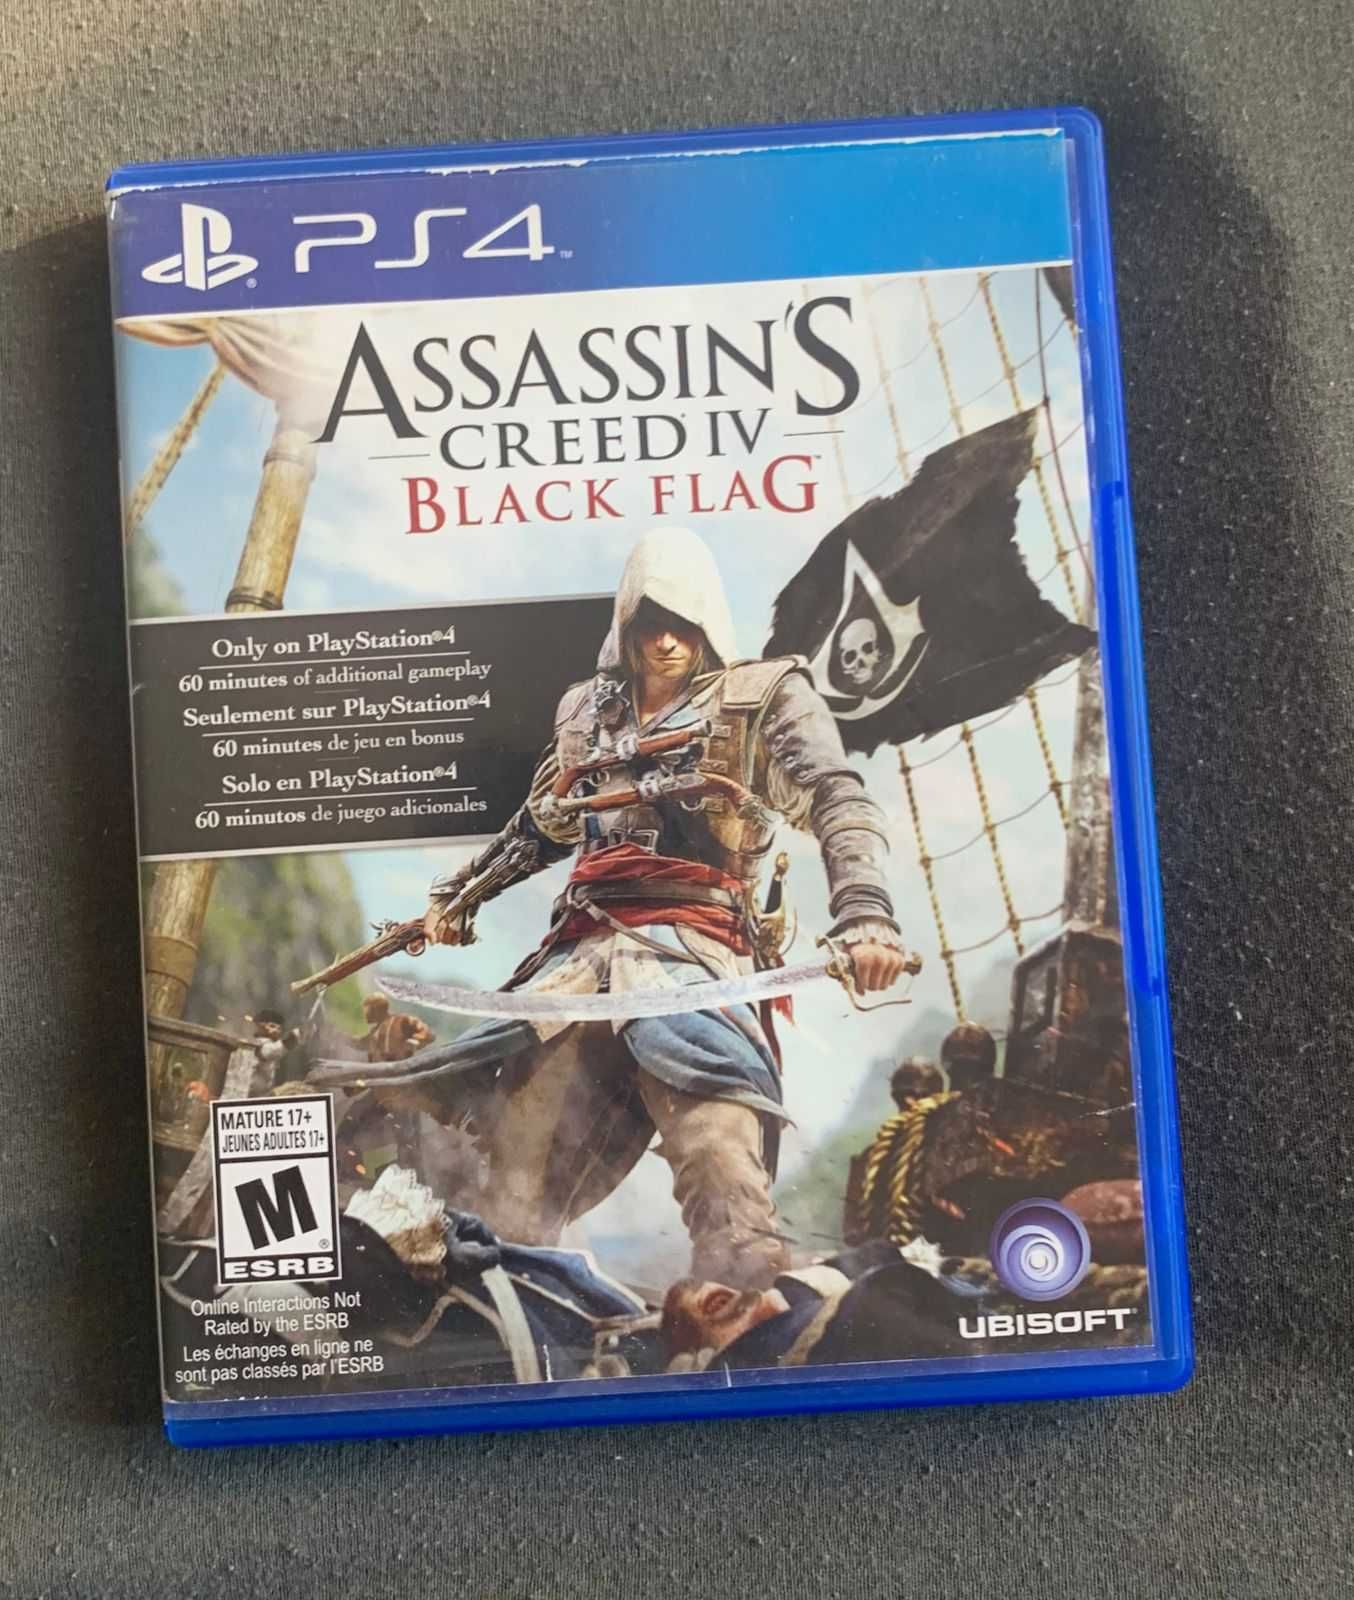 Assassin's Creed IV - Black Flag CD para jogo PS4